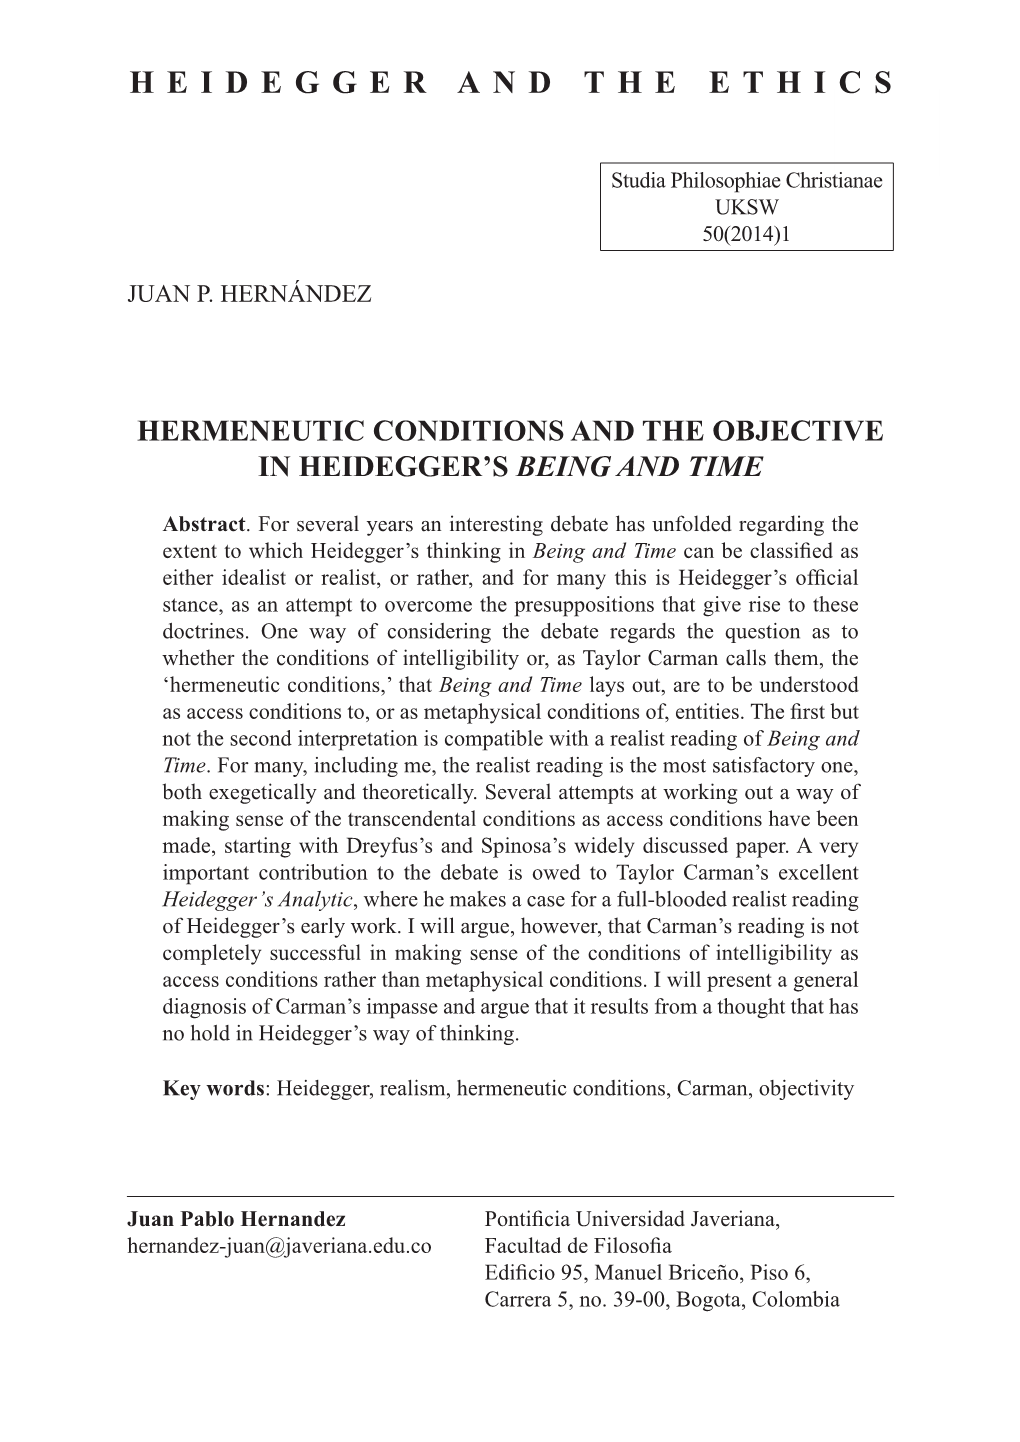 Hermeneutic Conditions and the Objective in Heidegger's